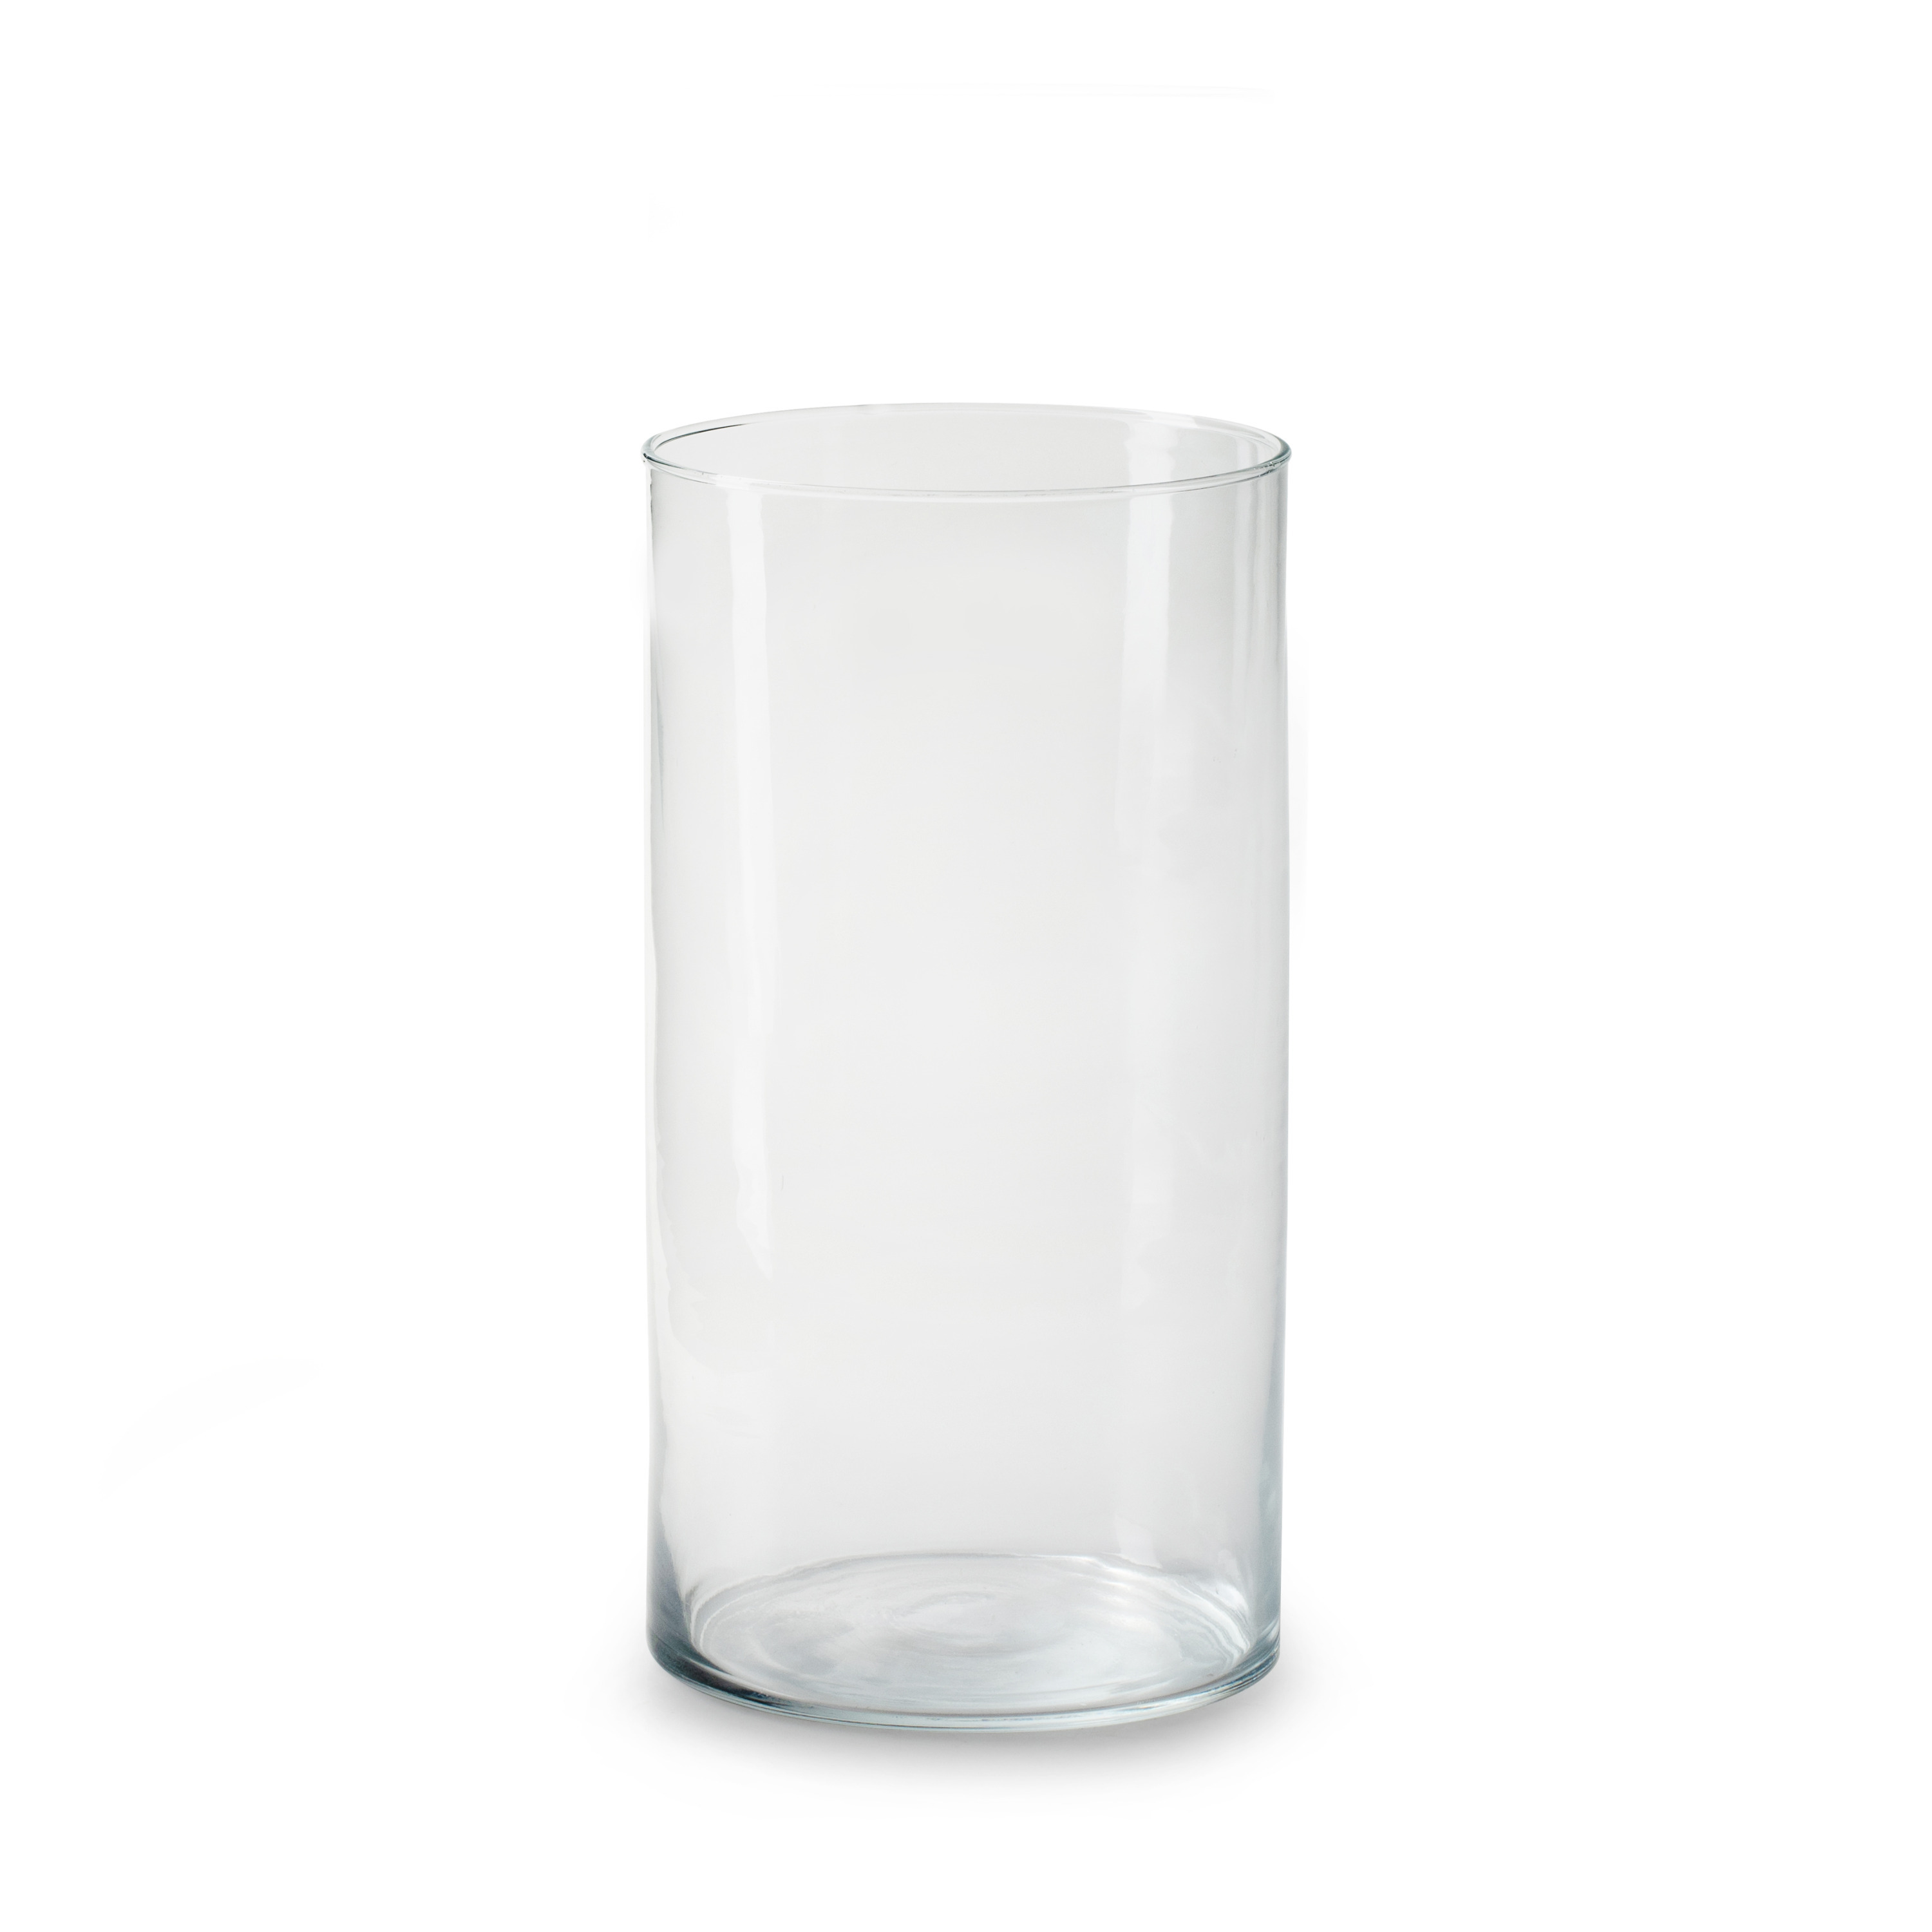 Jodeco Bloemenvaas Chelsea - helder transparant - glas - D12,5 x H25 cm - cilinder vaas -